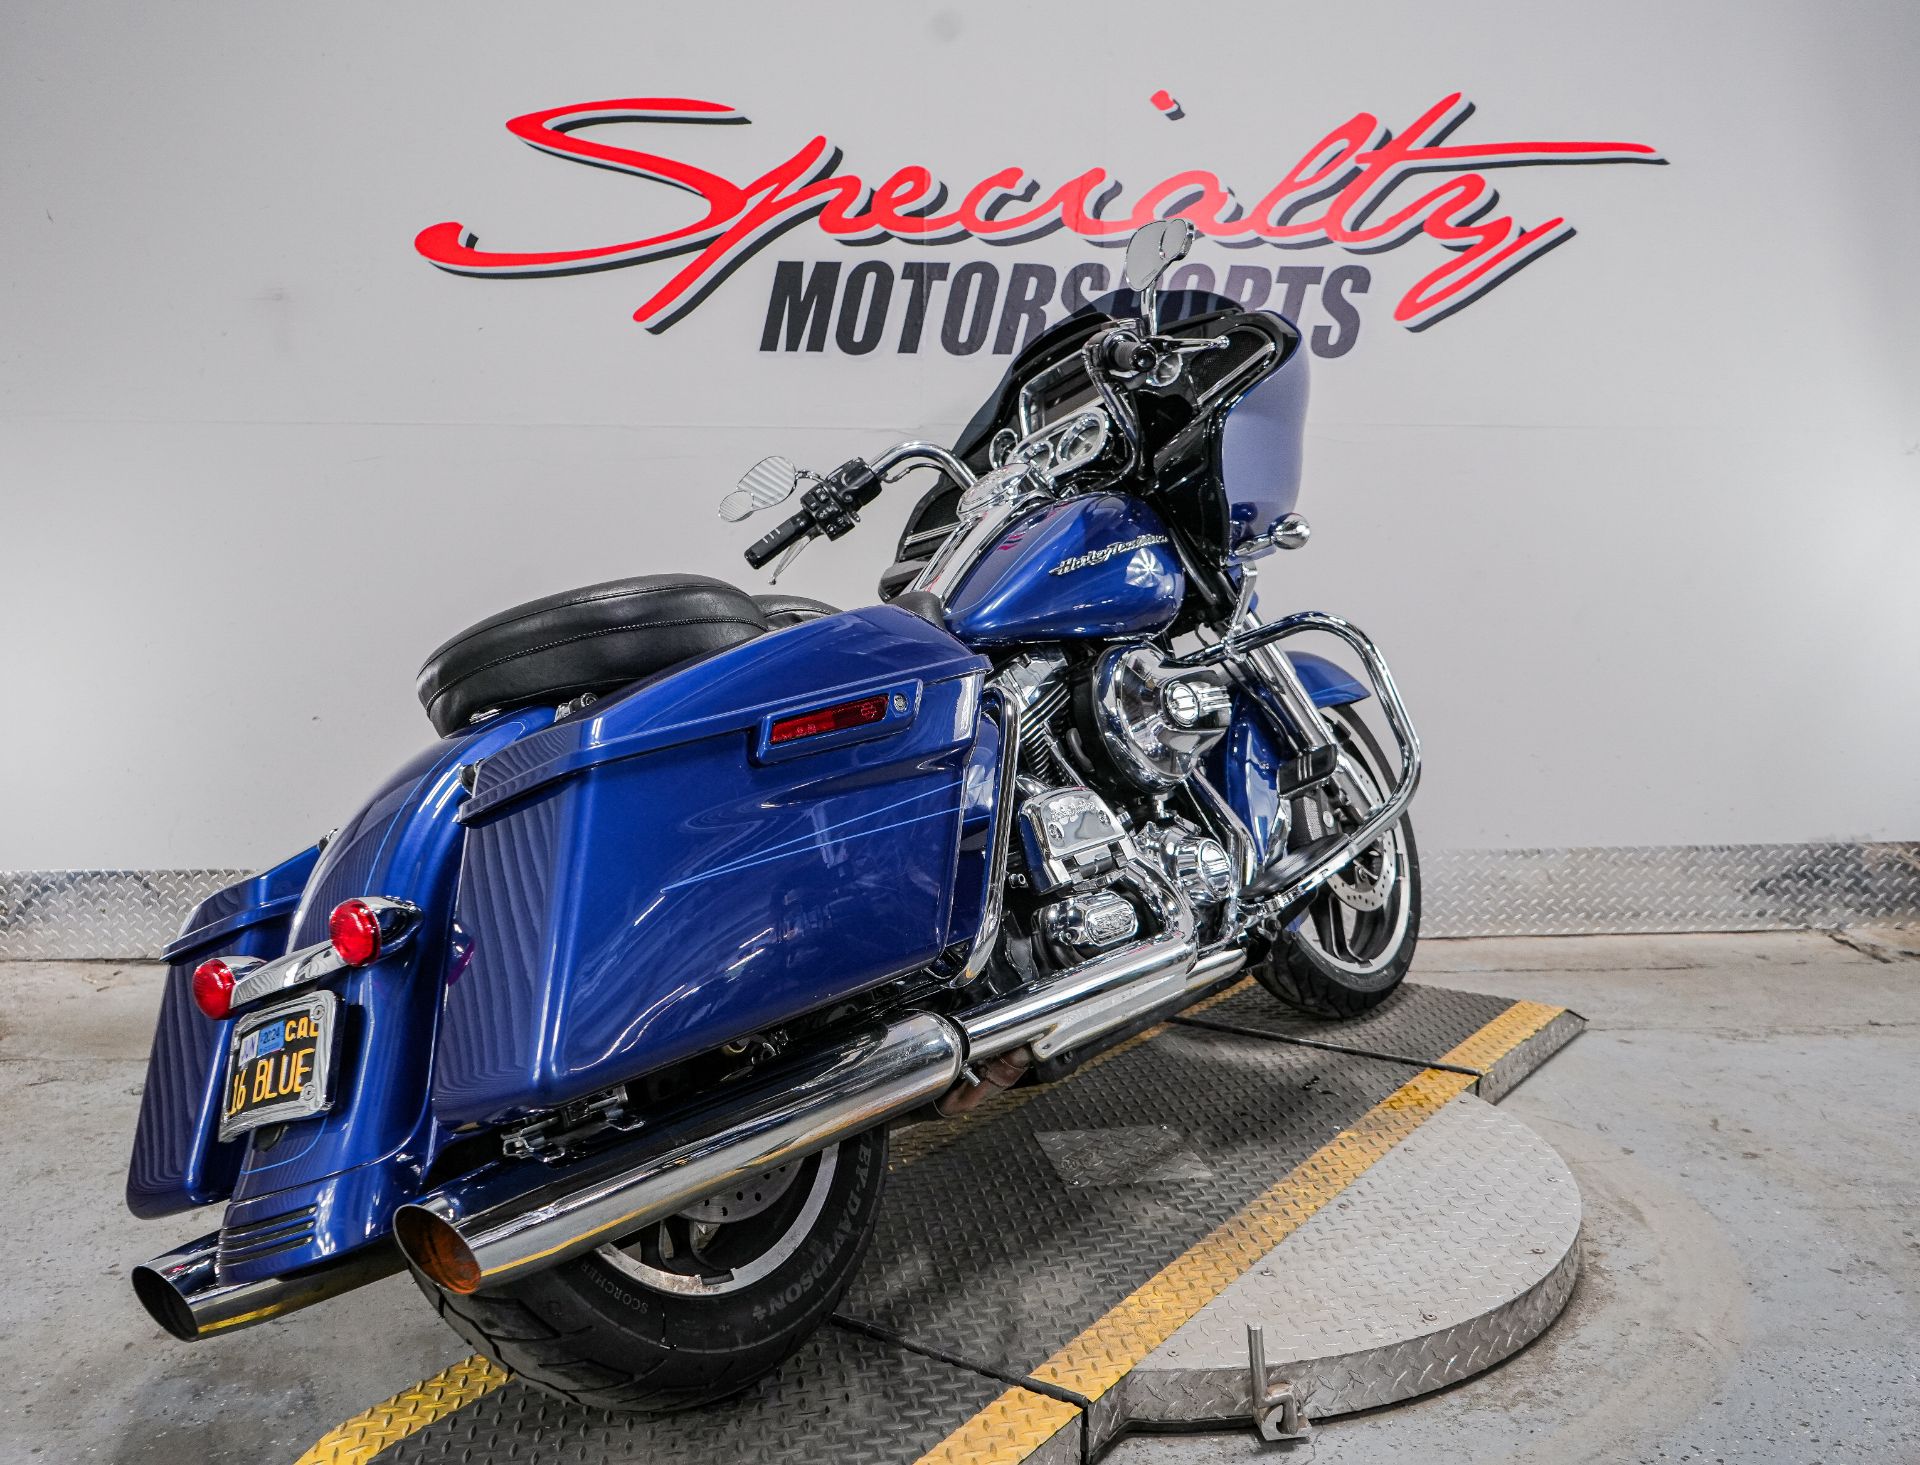 2016 Harley-Davidson Road Glide® Special in Sacramento, California - Photo 2